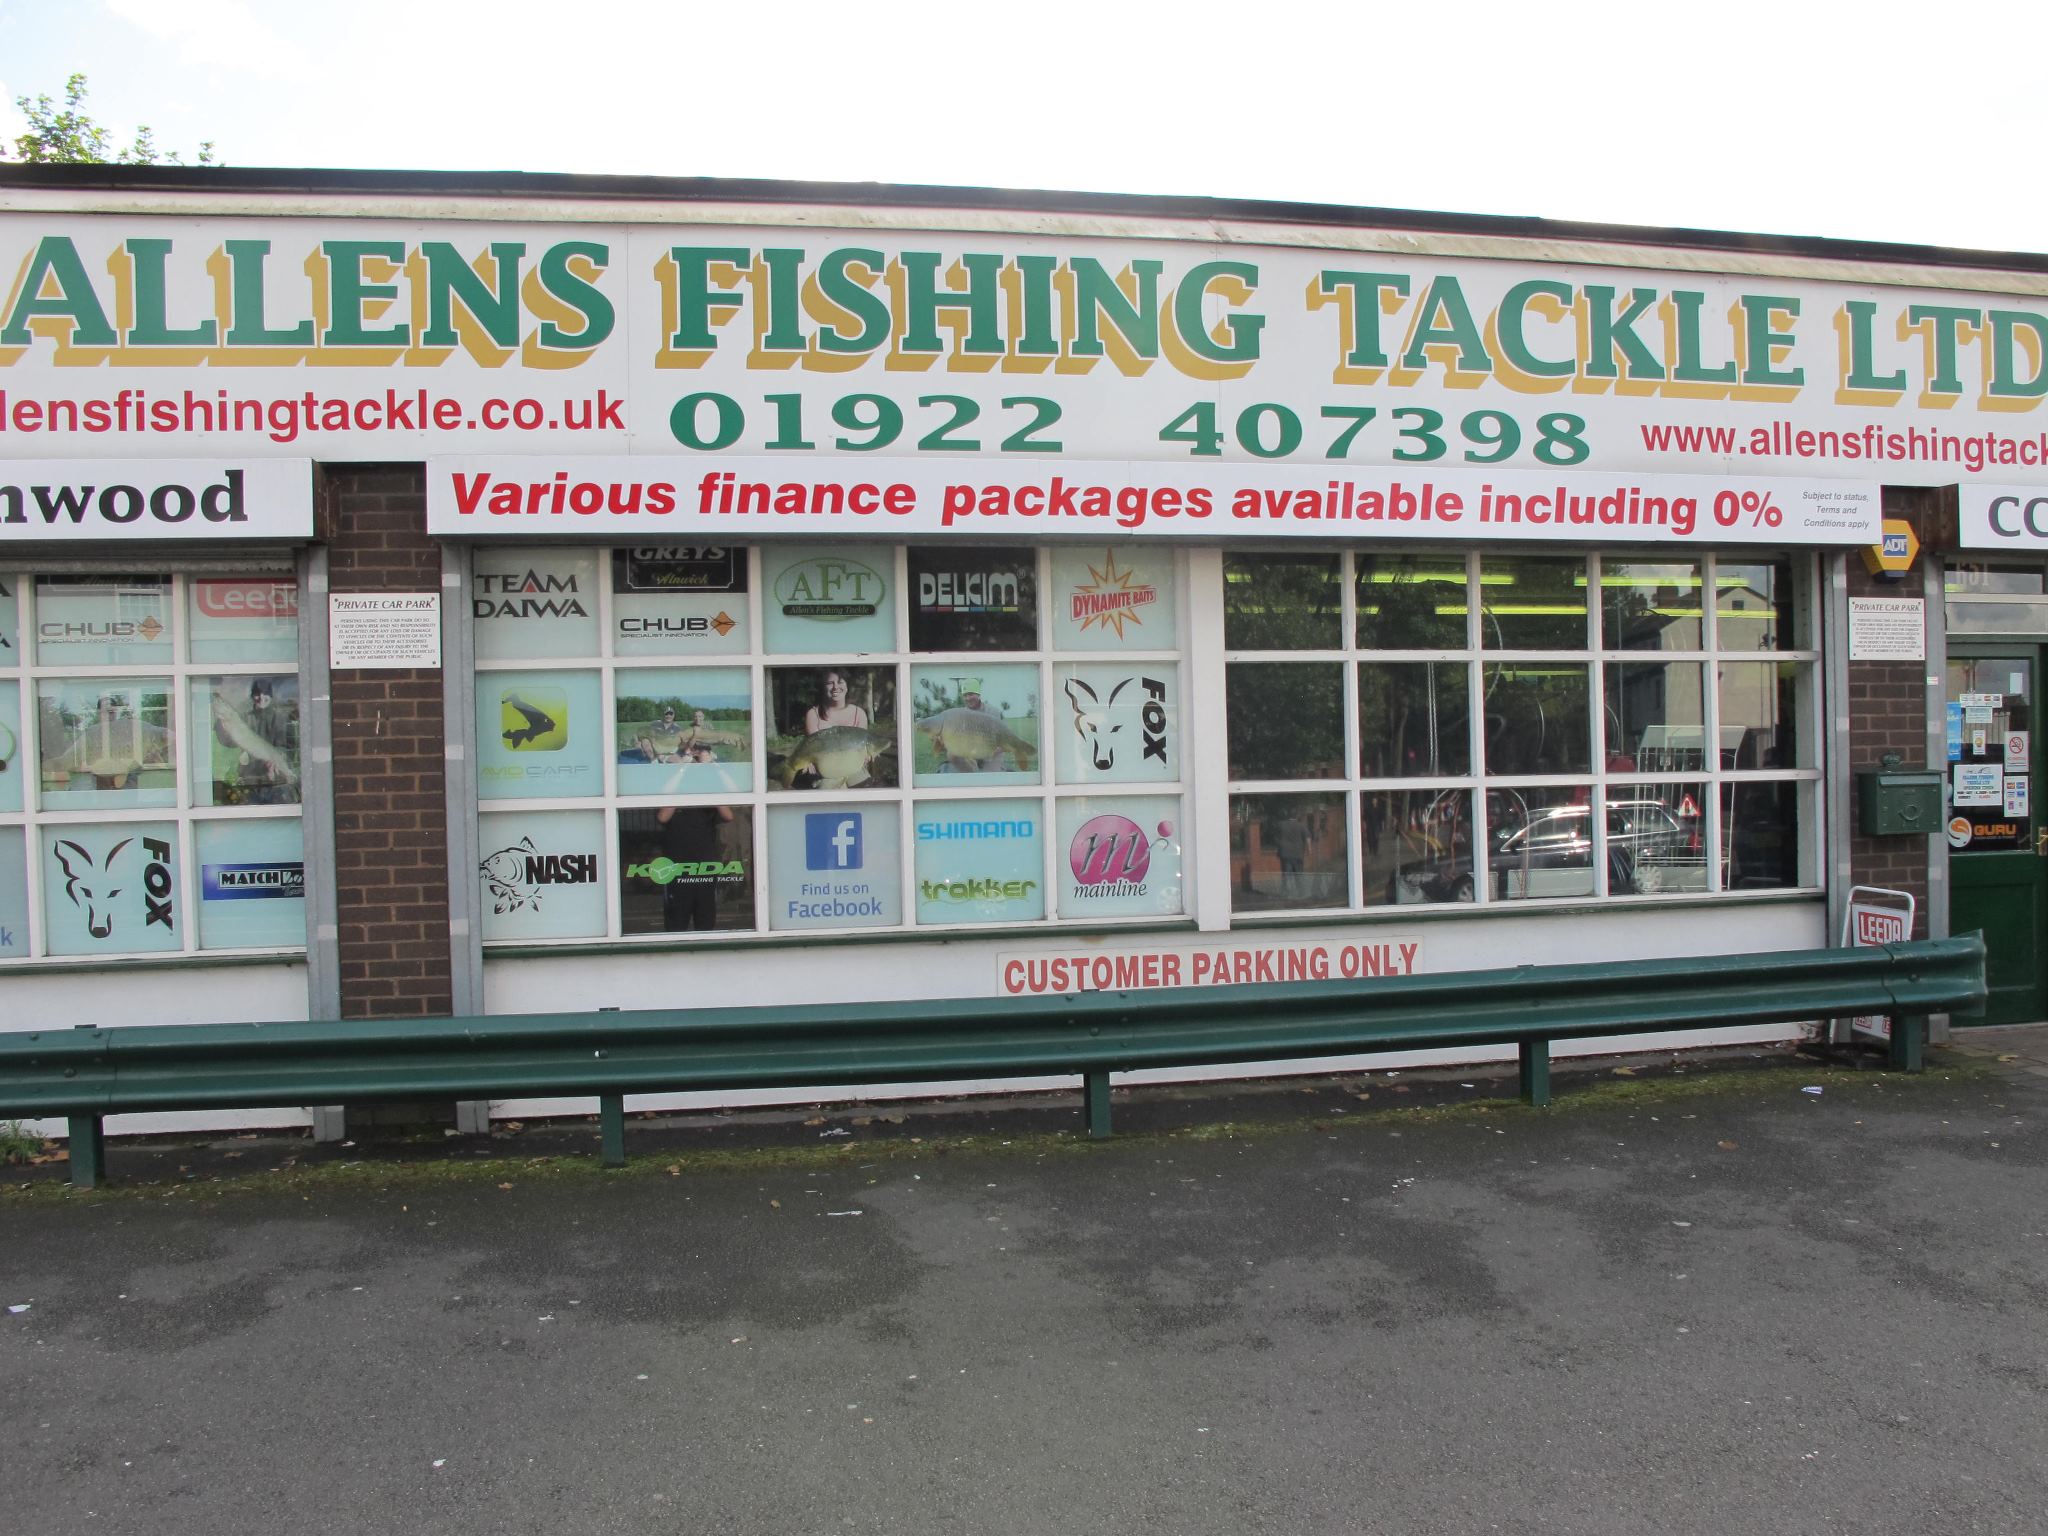 Allens Fishing Tackle Ltd